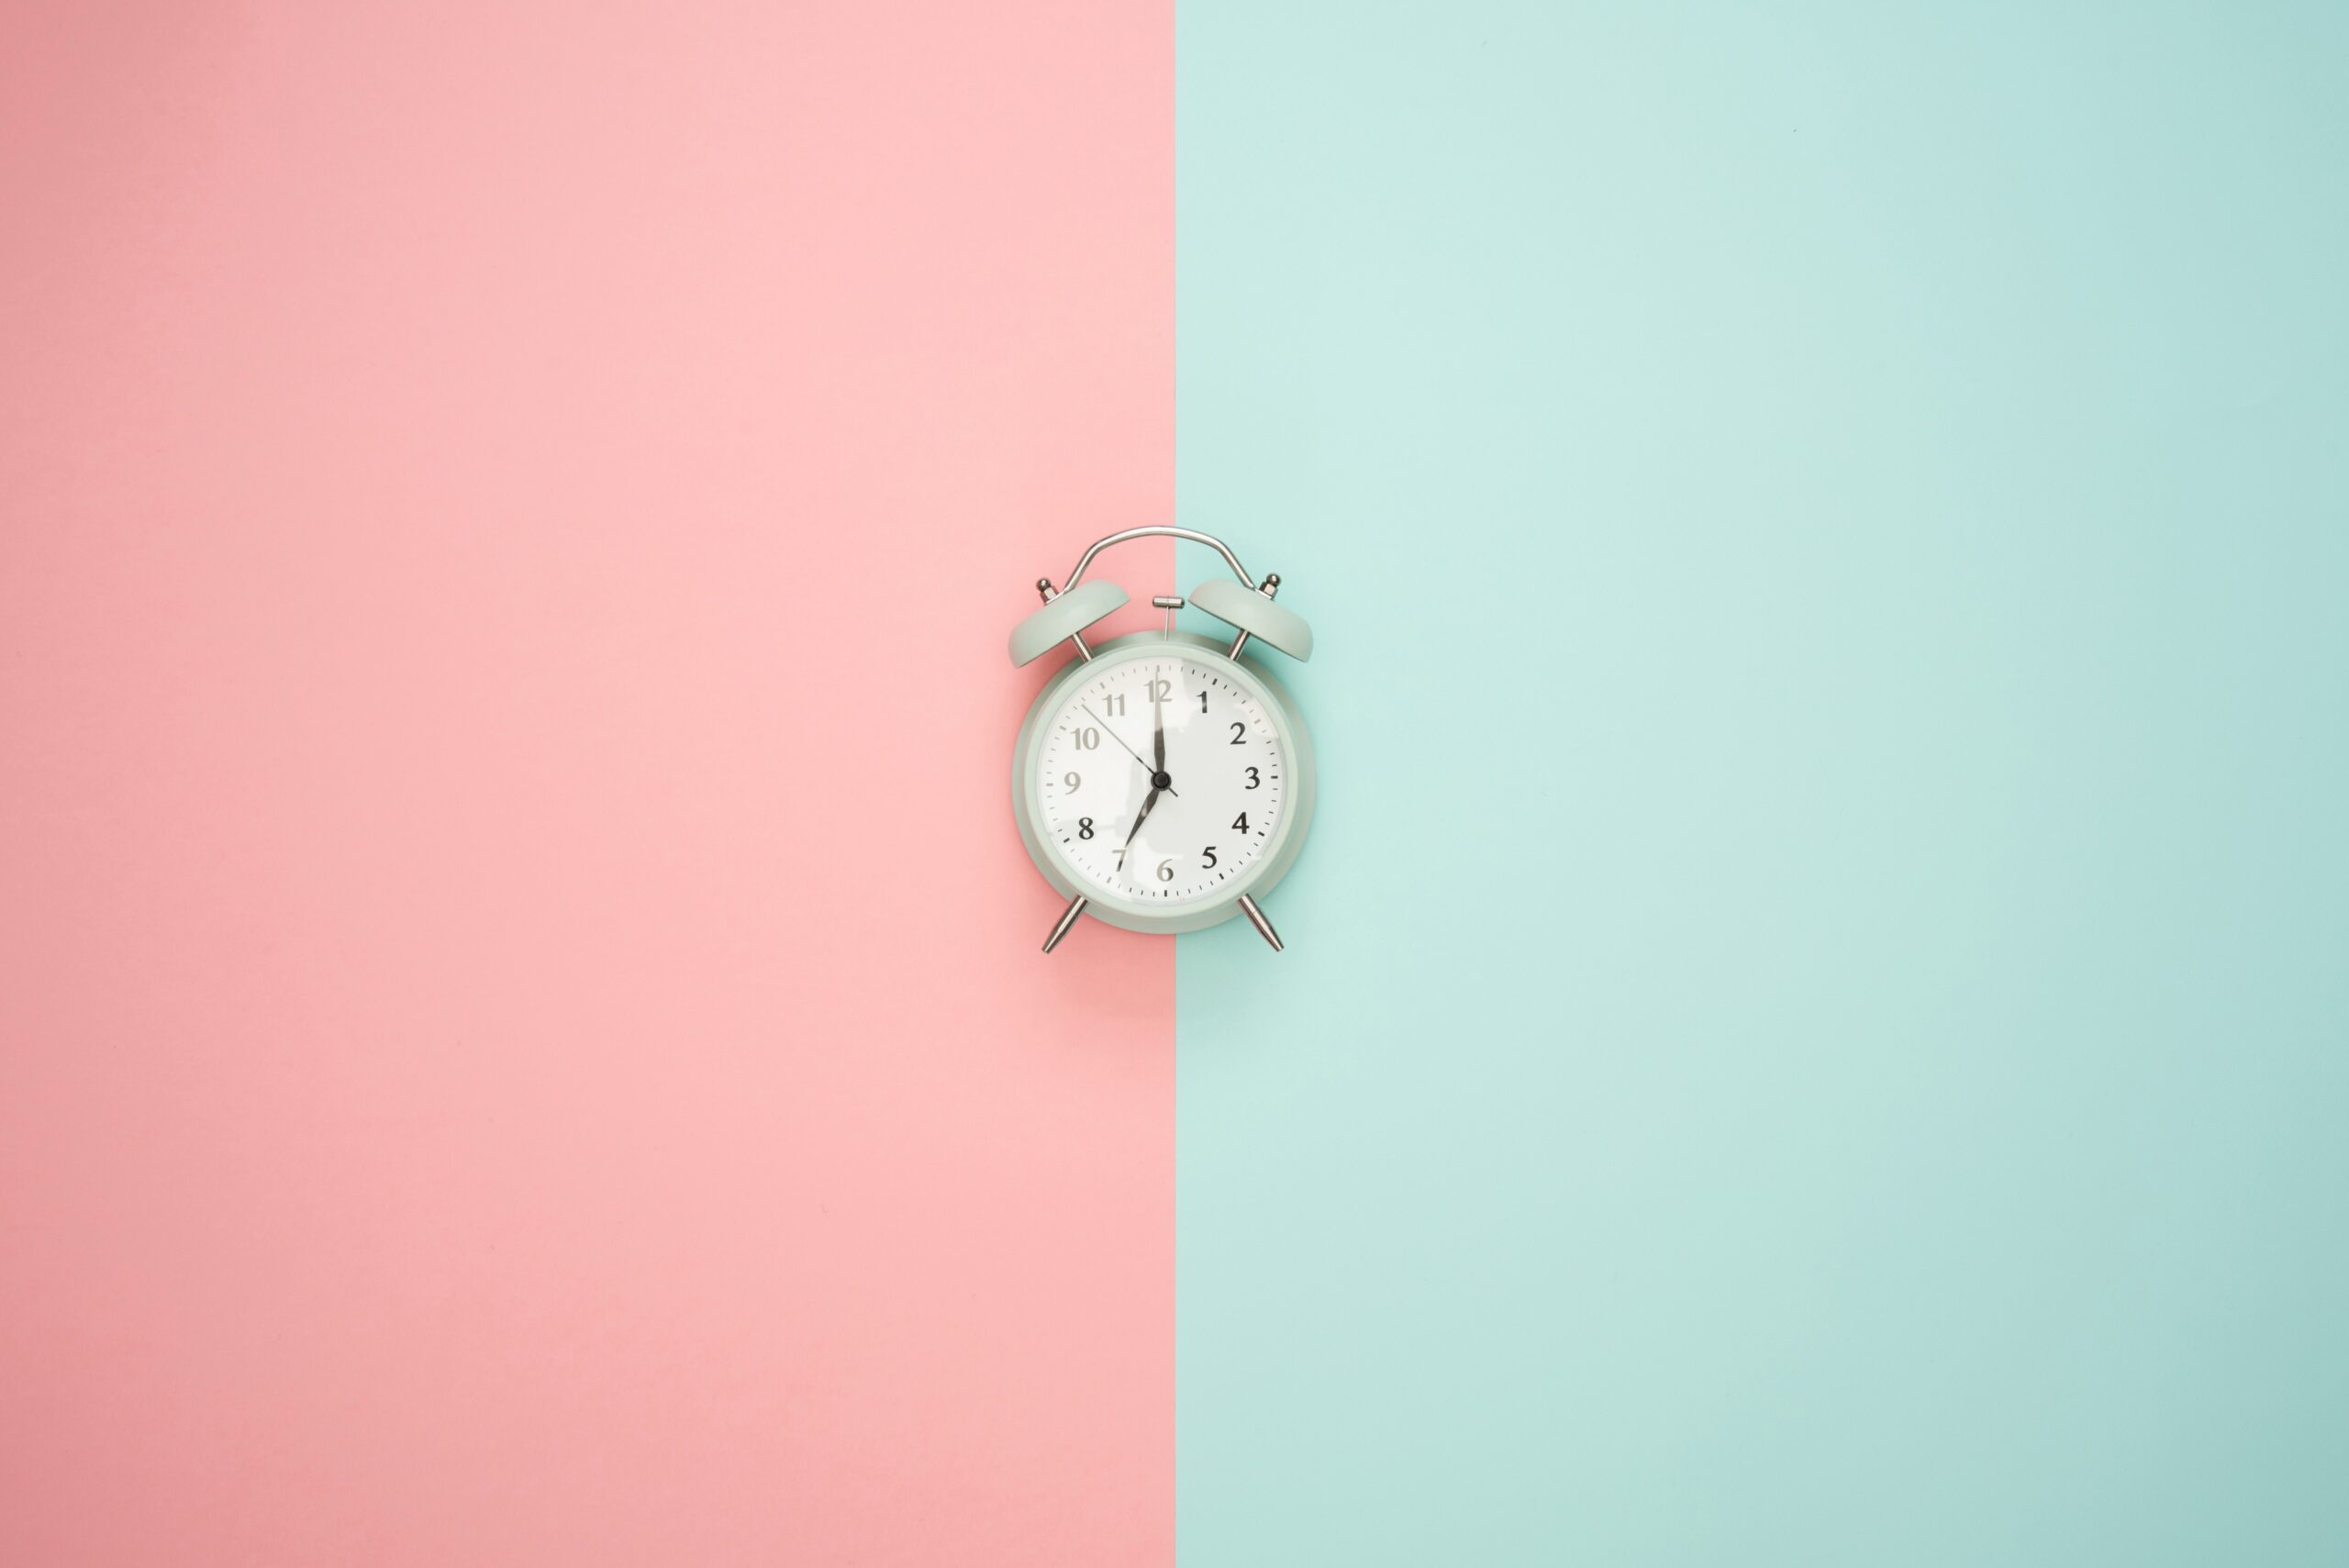 Alarm clock between light blue and light pink panels